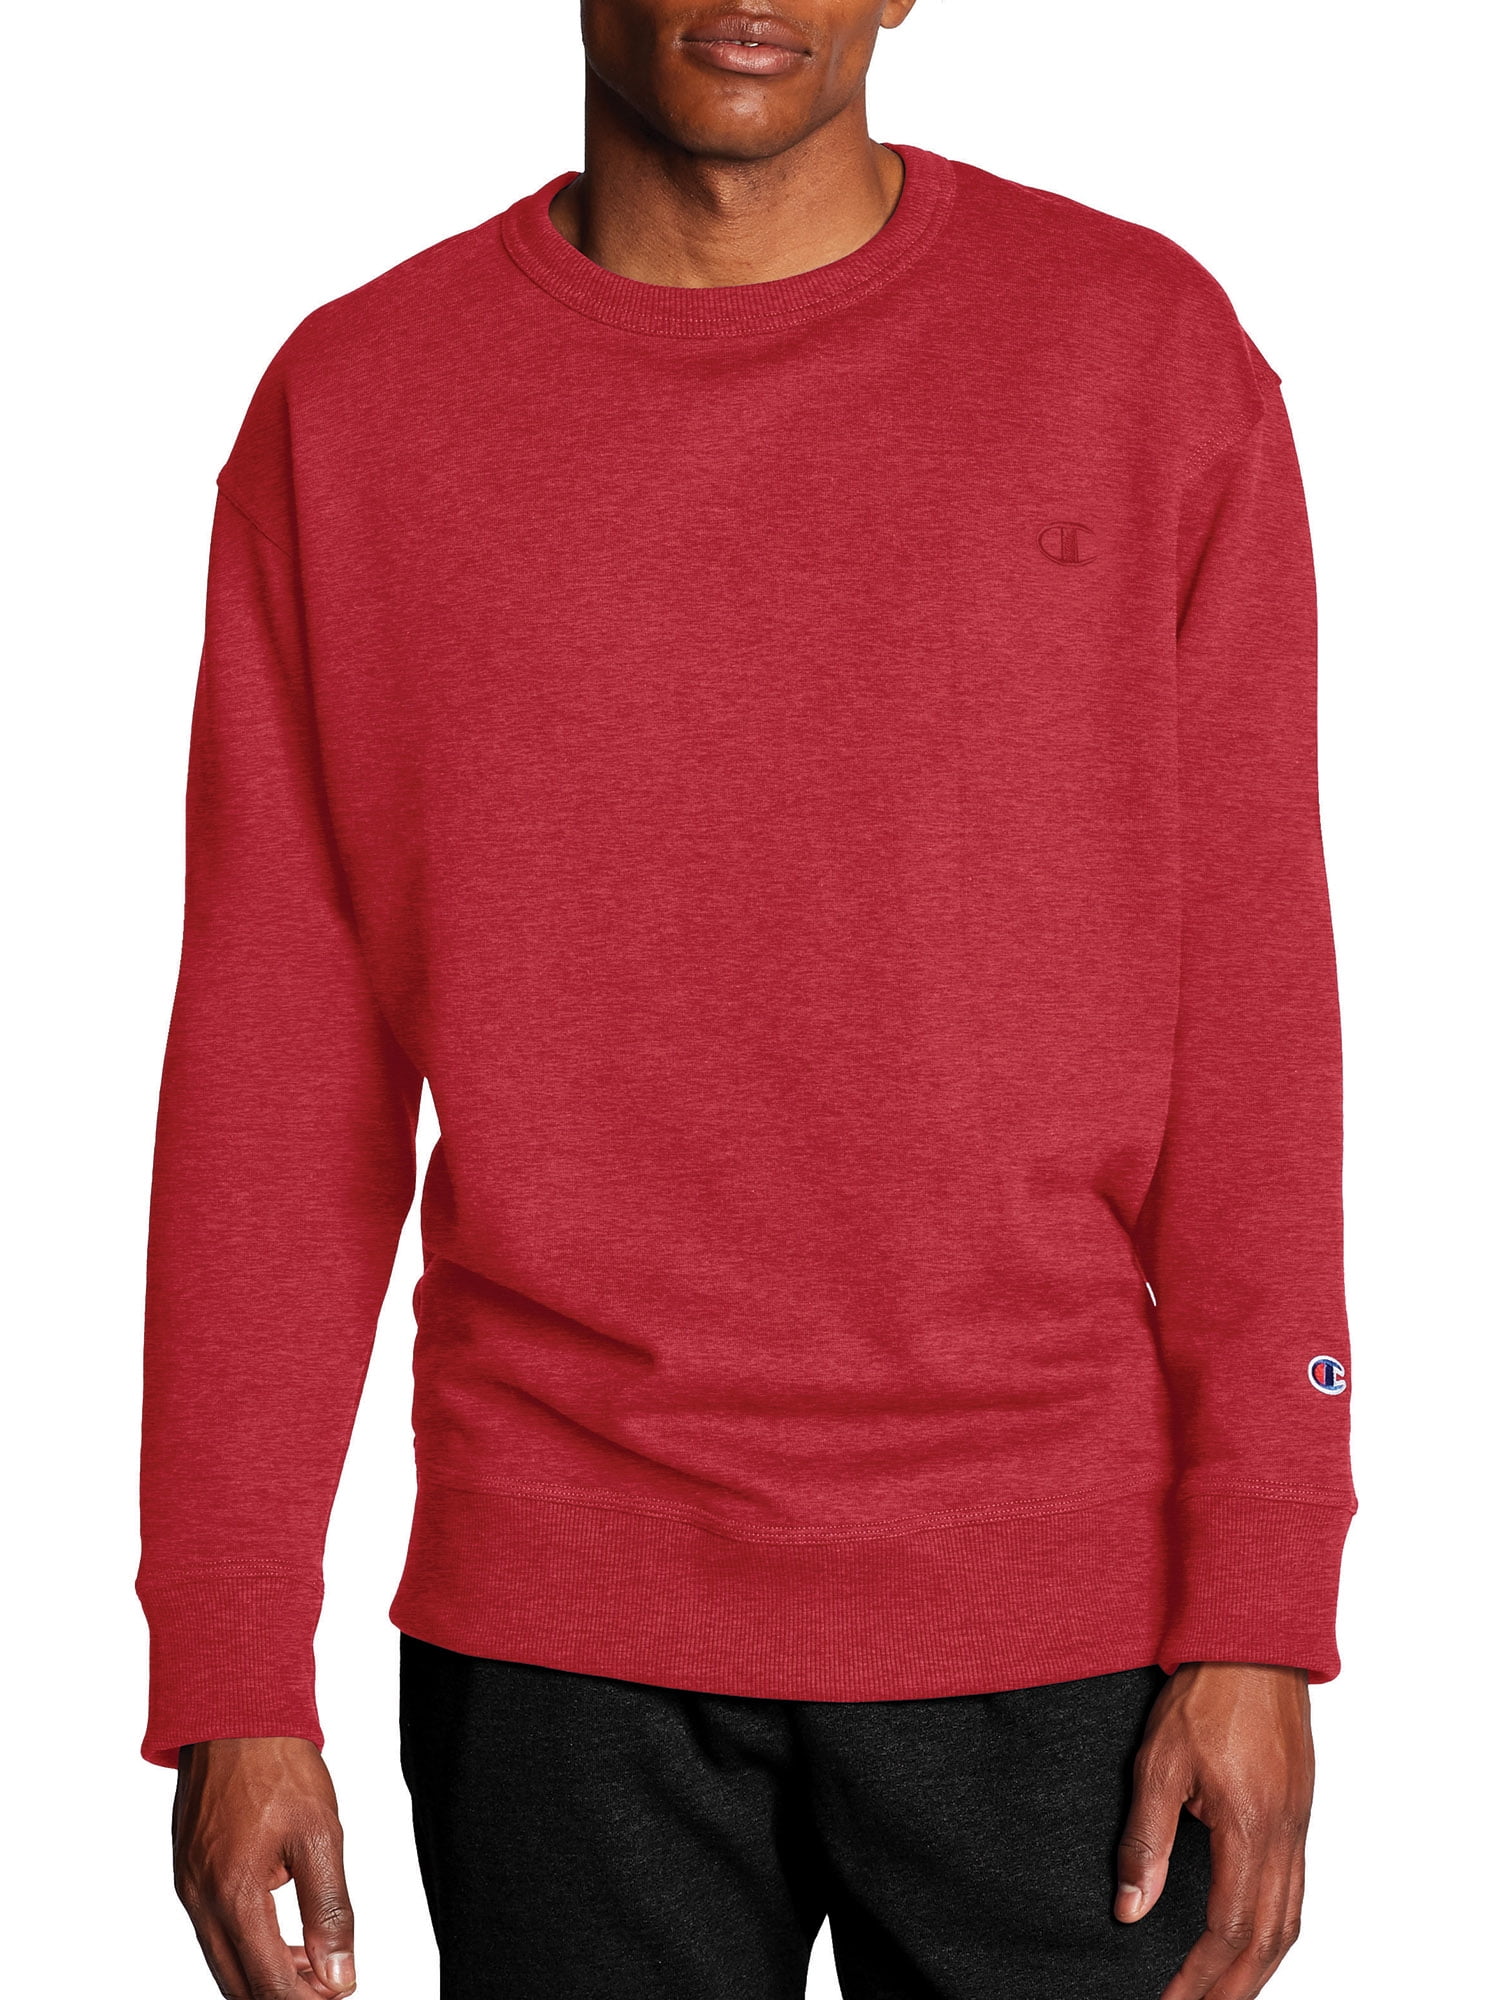 Baseball Colorado Rockies shirt spell out nice design Streetwear Sweatshirt Sweater Size Stripes Multi color